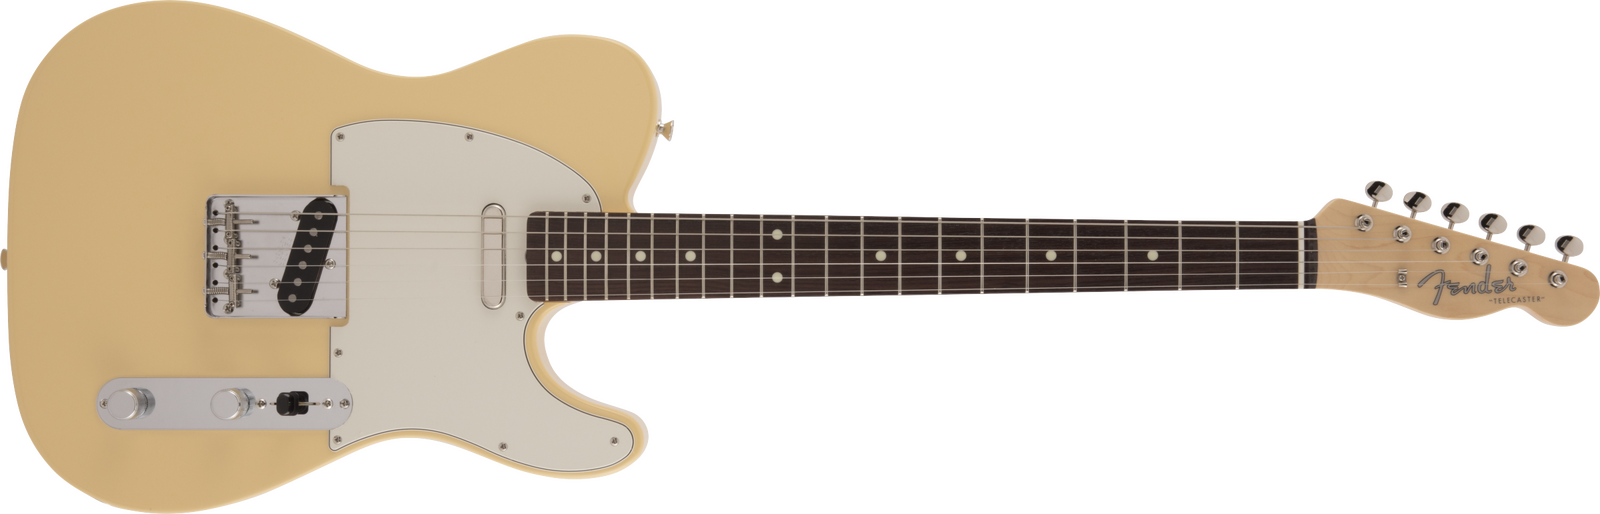 Fender Traditional 60s Telecaster in Vintage White